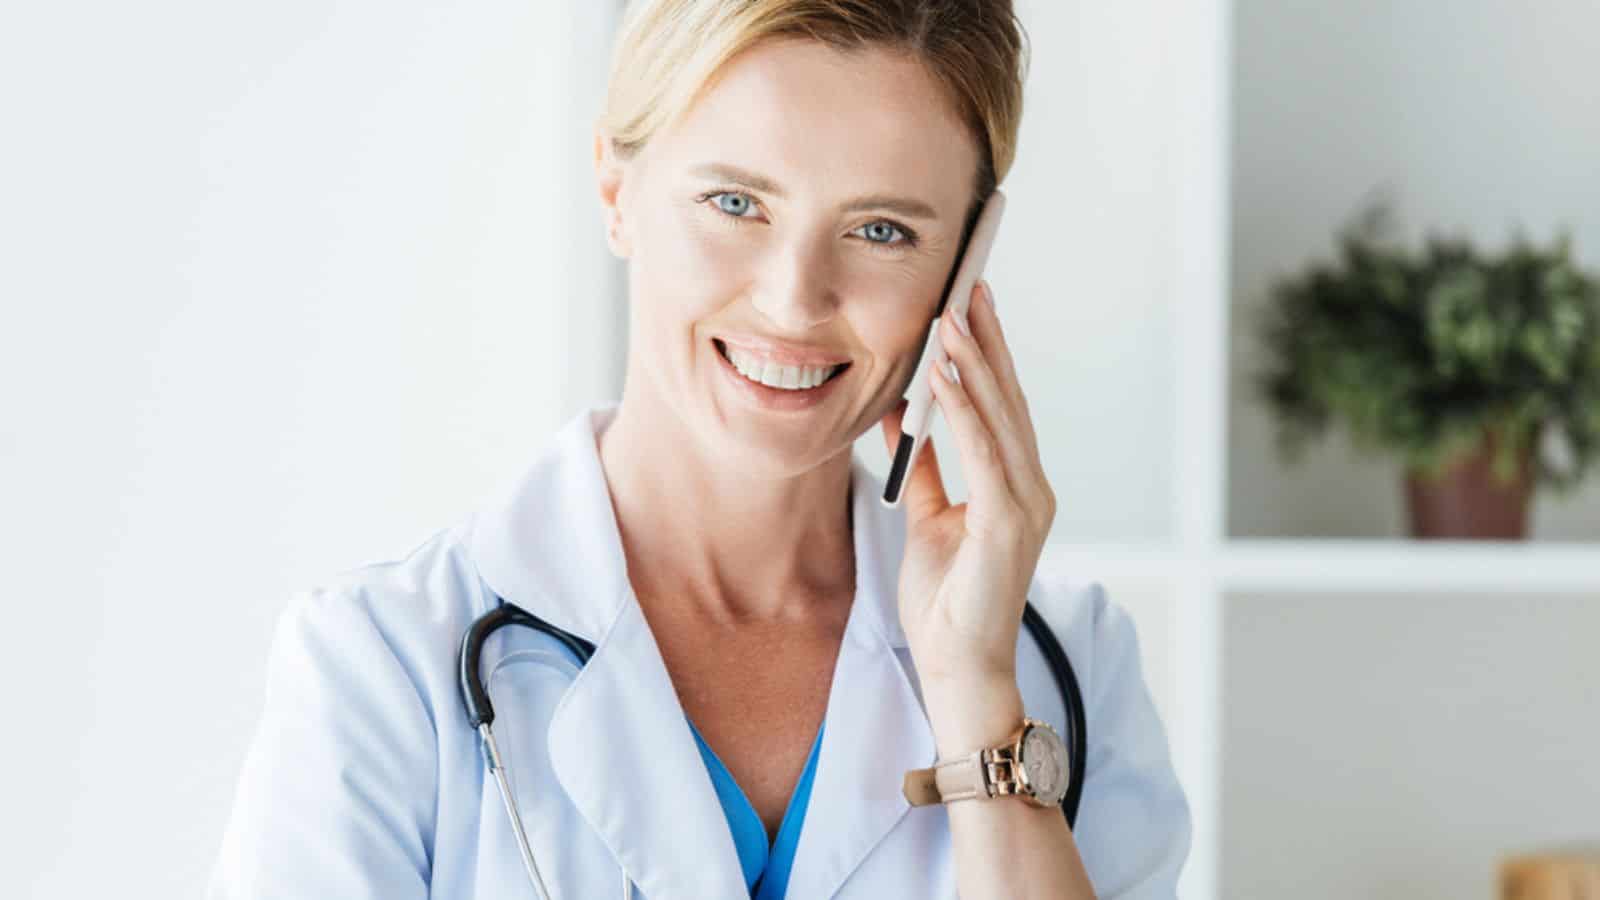 Portrait of happy female doctor in white coat